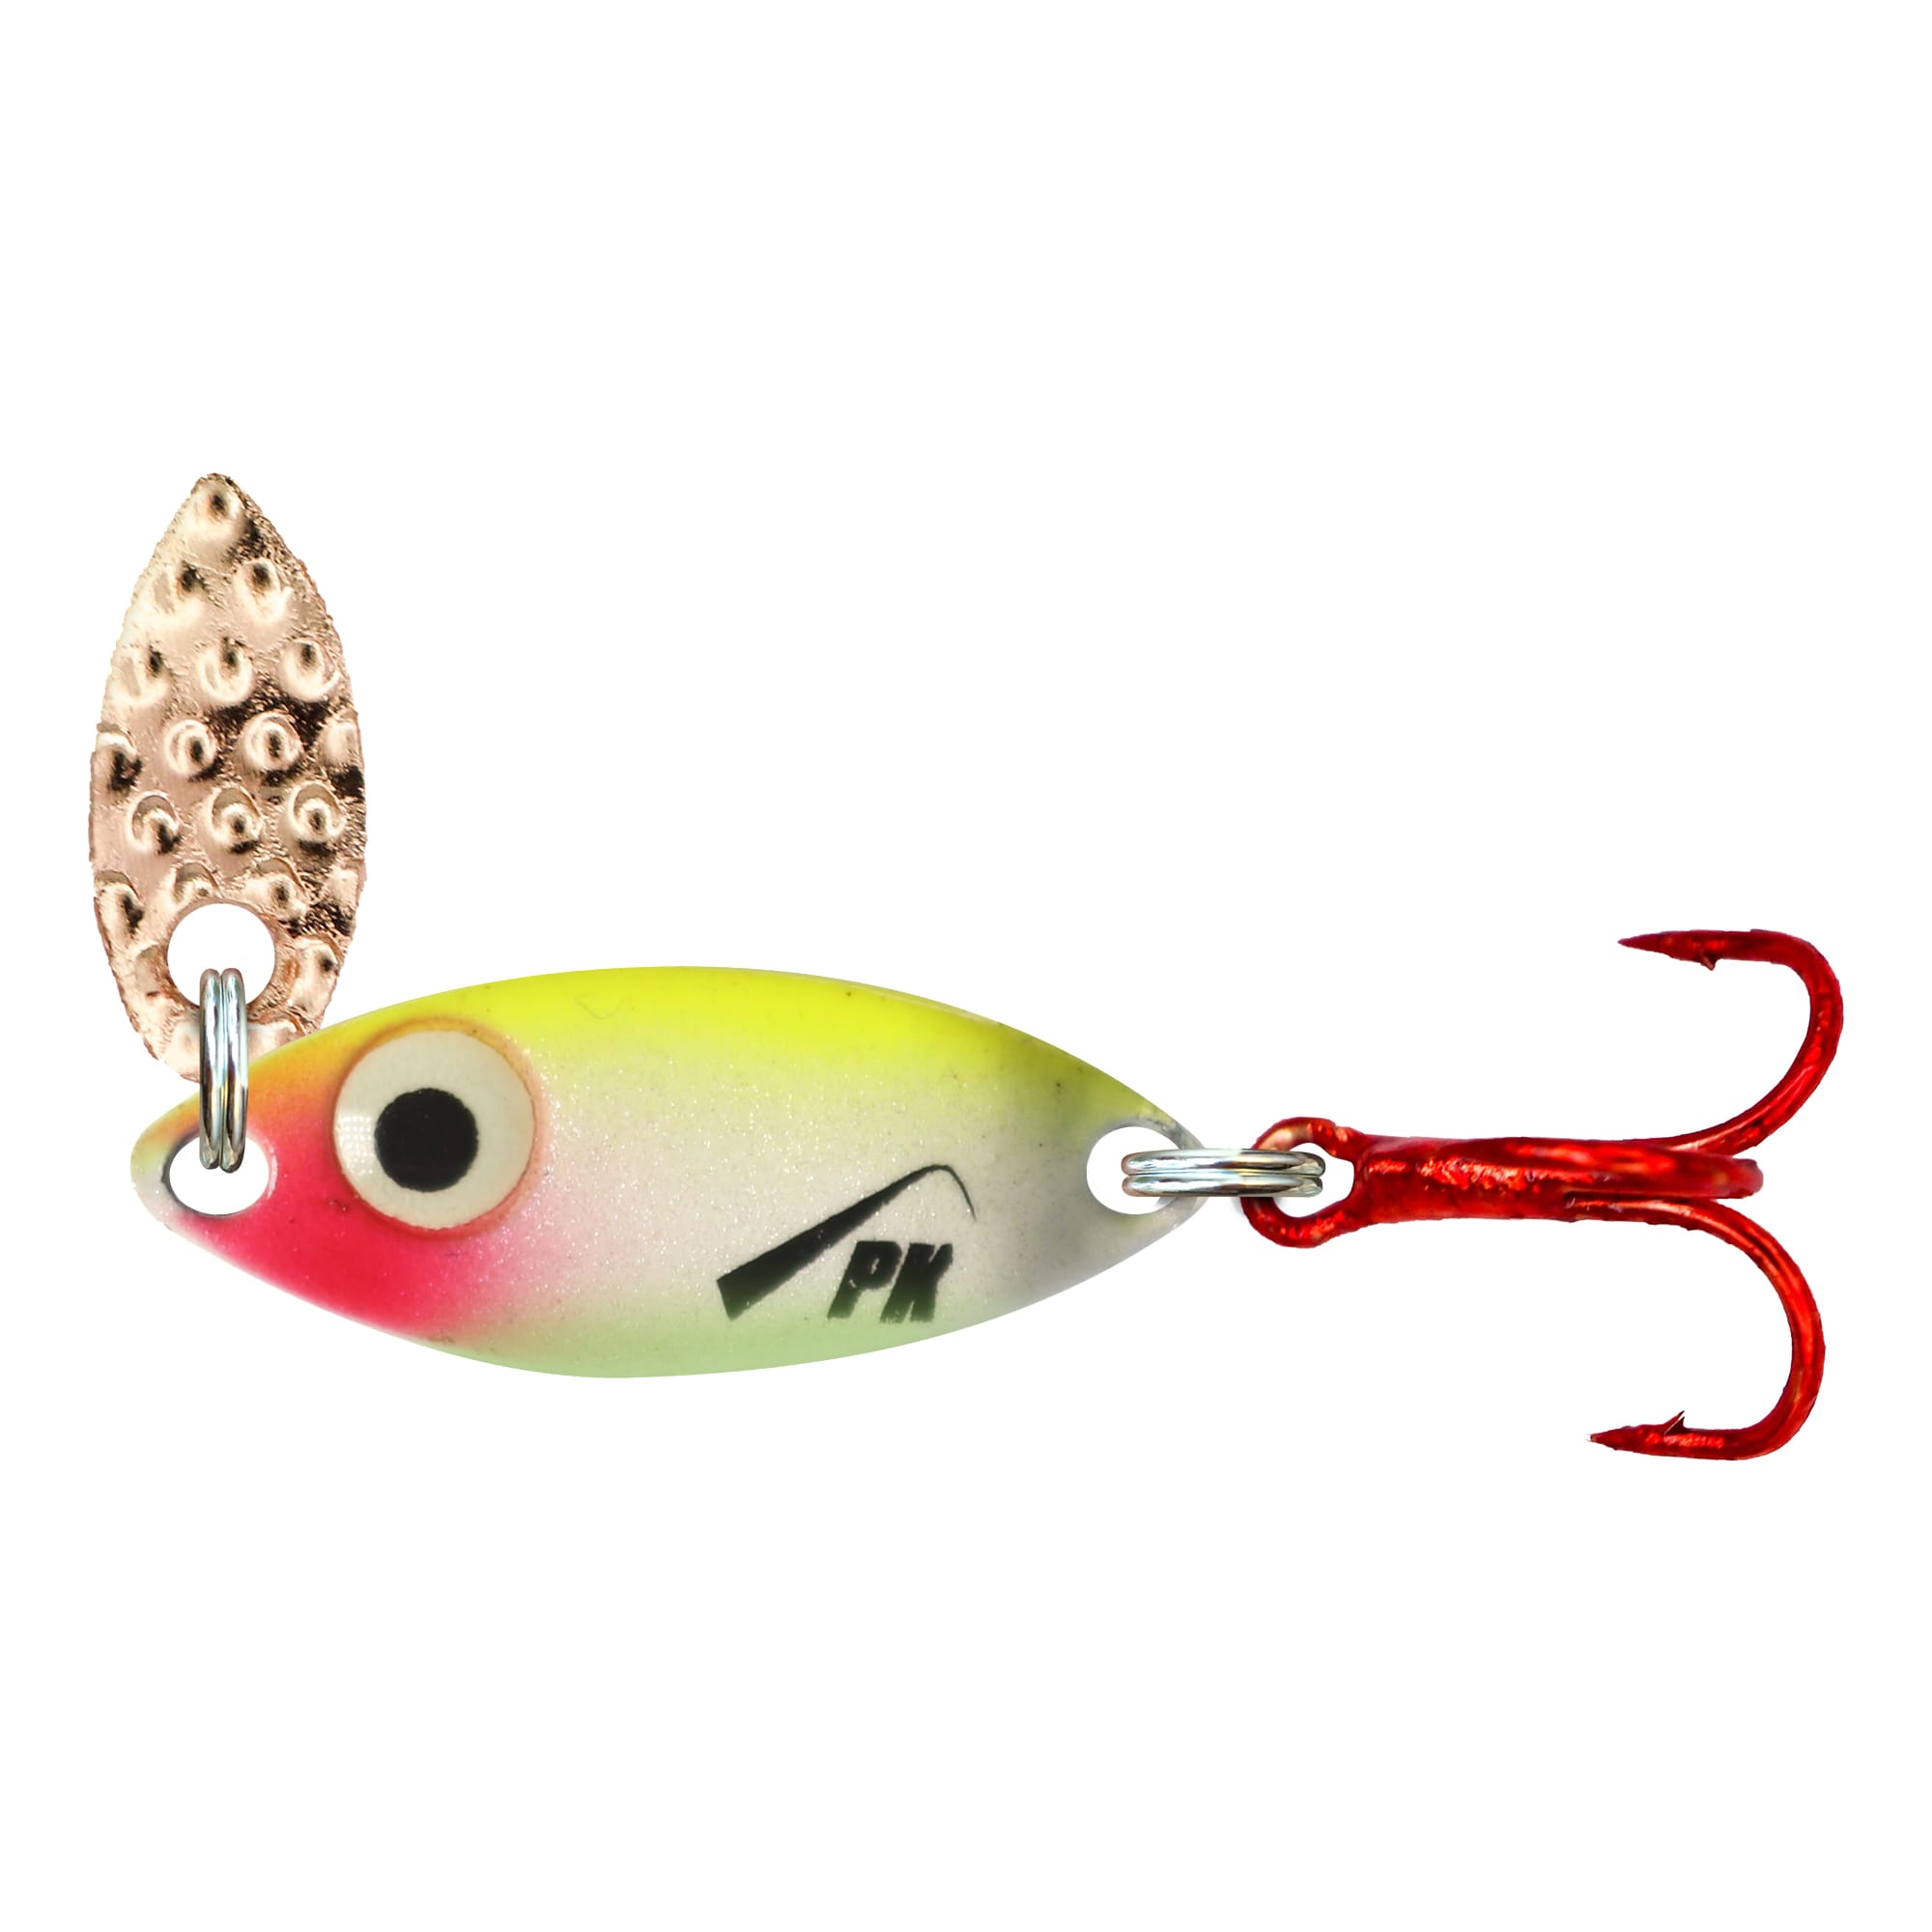 PK Predator Tungsten Flash Fishing Spoon - Pearl Chartreuse Glow,PK Predator Tungsten Flash Fishing Spoon - Pearl Chartreuse Glow